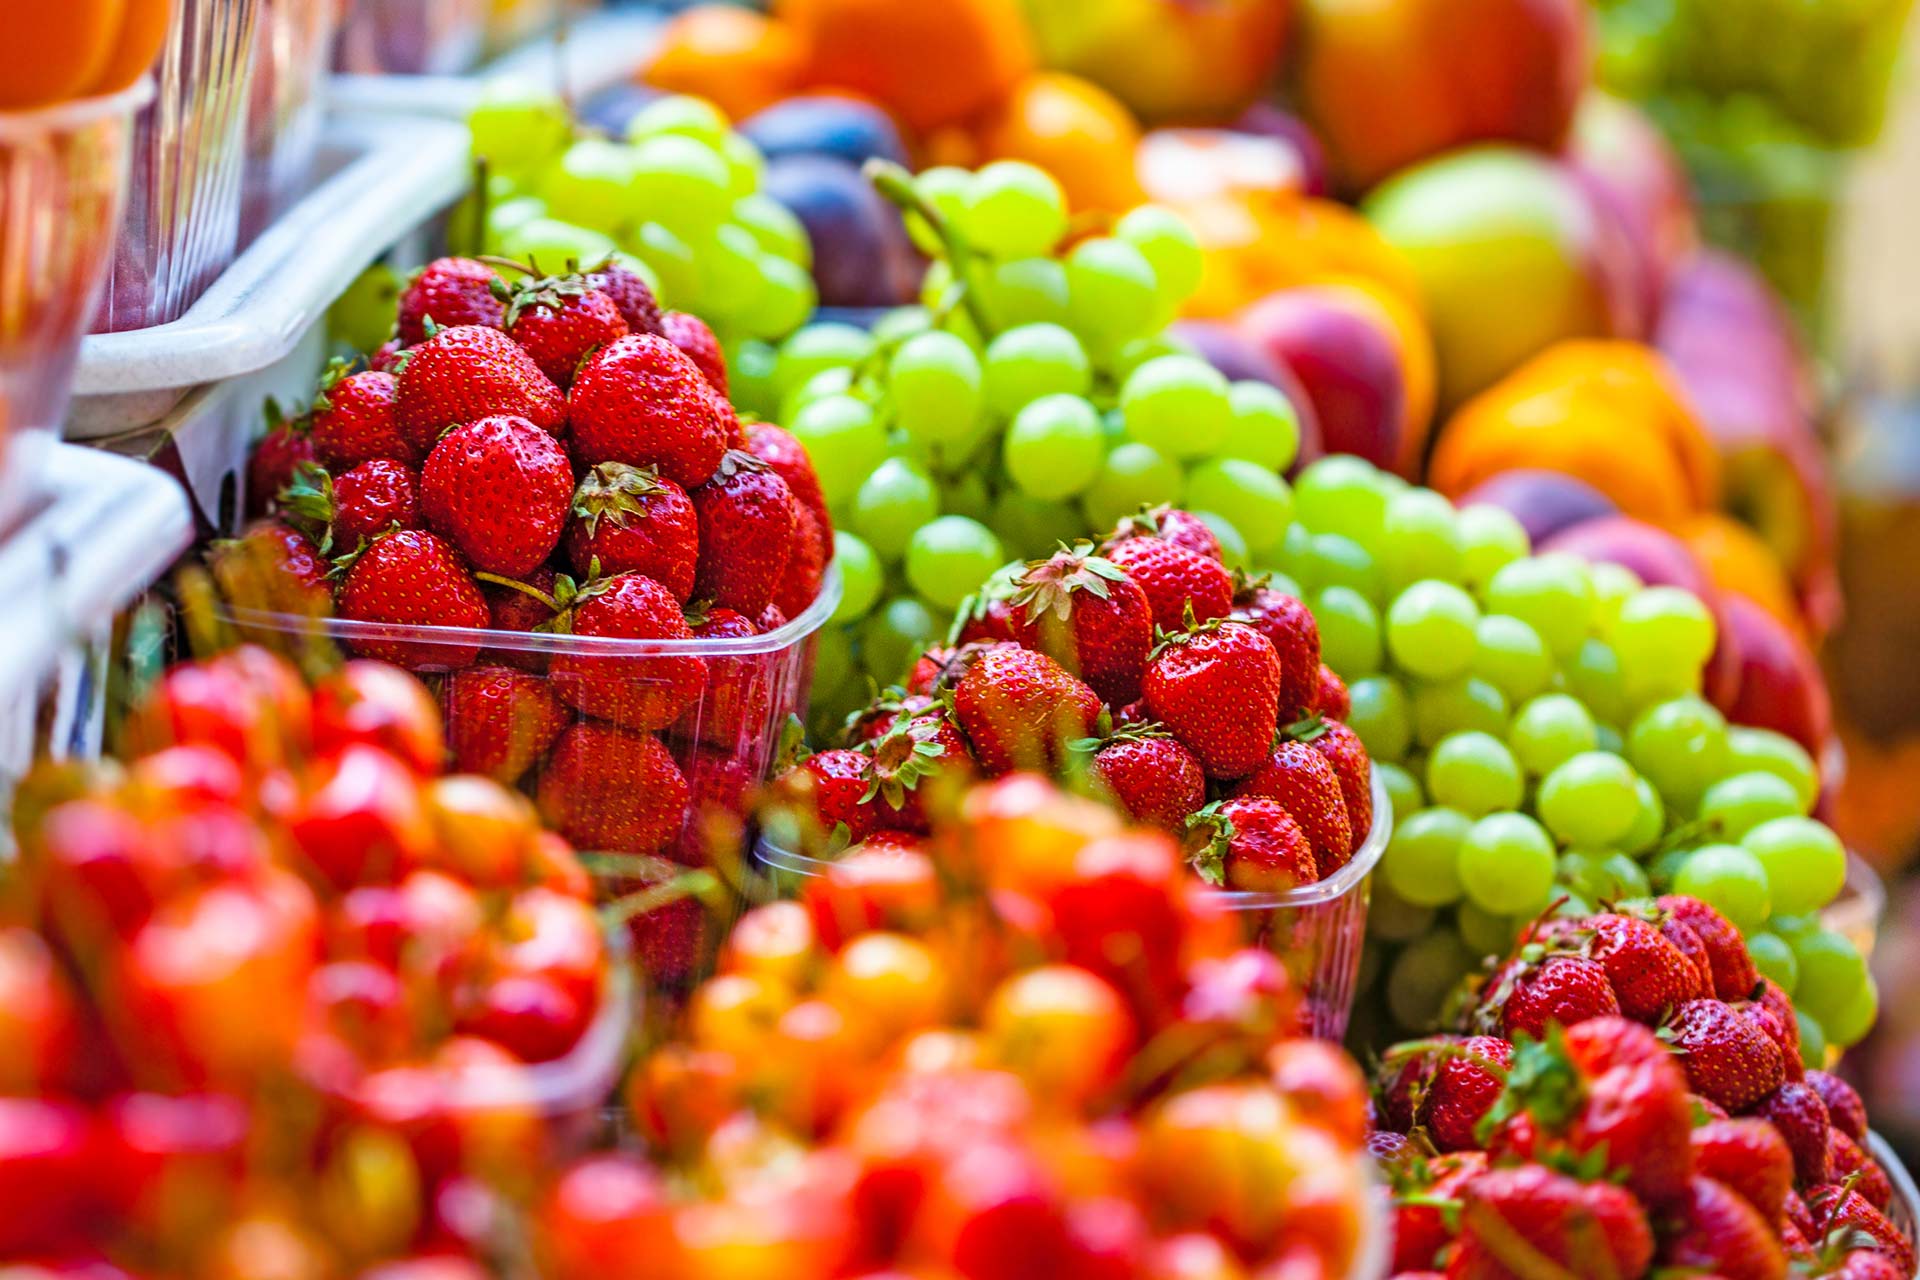 Jaleel - Fresh Fruits & Vegetables Wholesaling